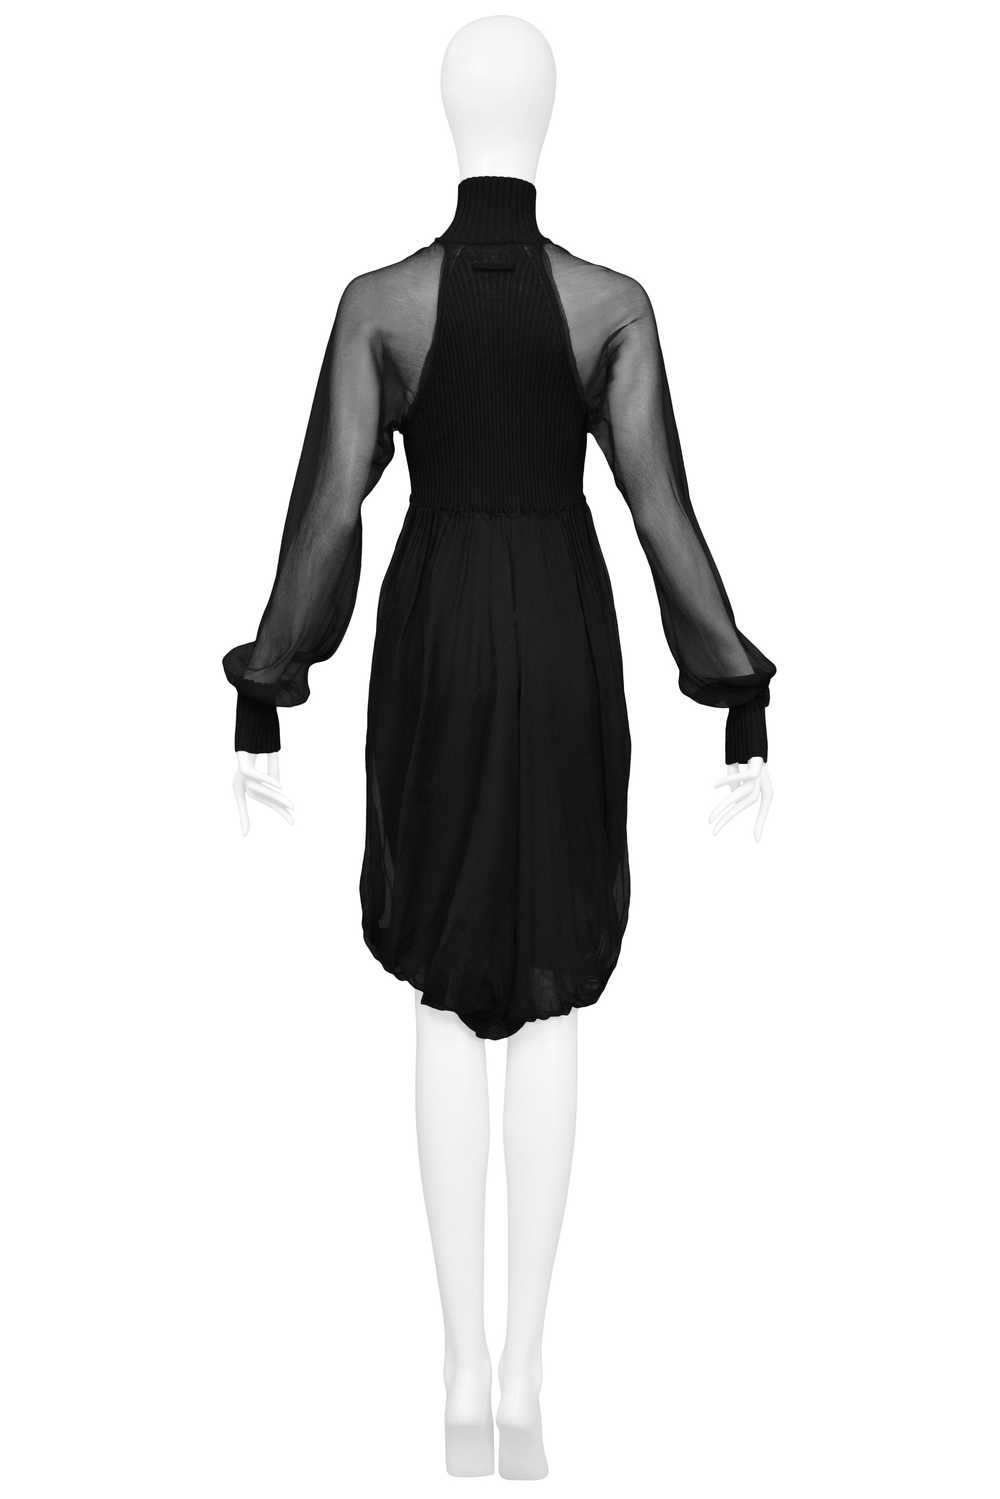 GAULTIER BLACK KNIT ILLUSION DRESS WITH CHIFFON O… - image 2